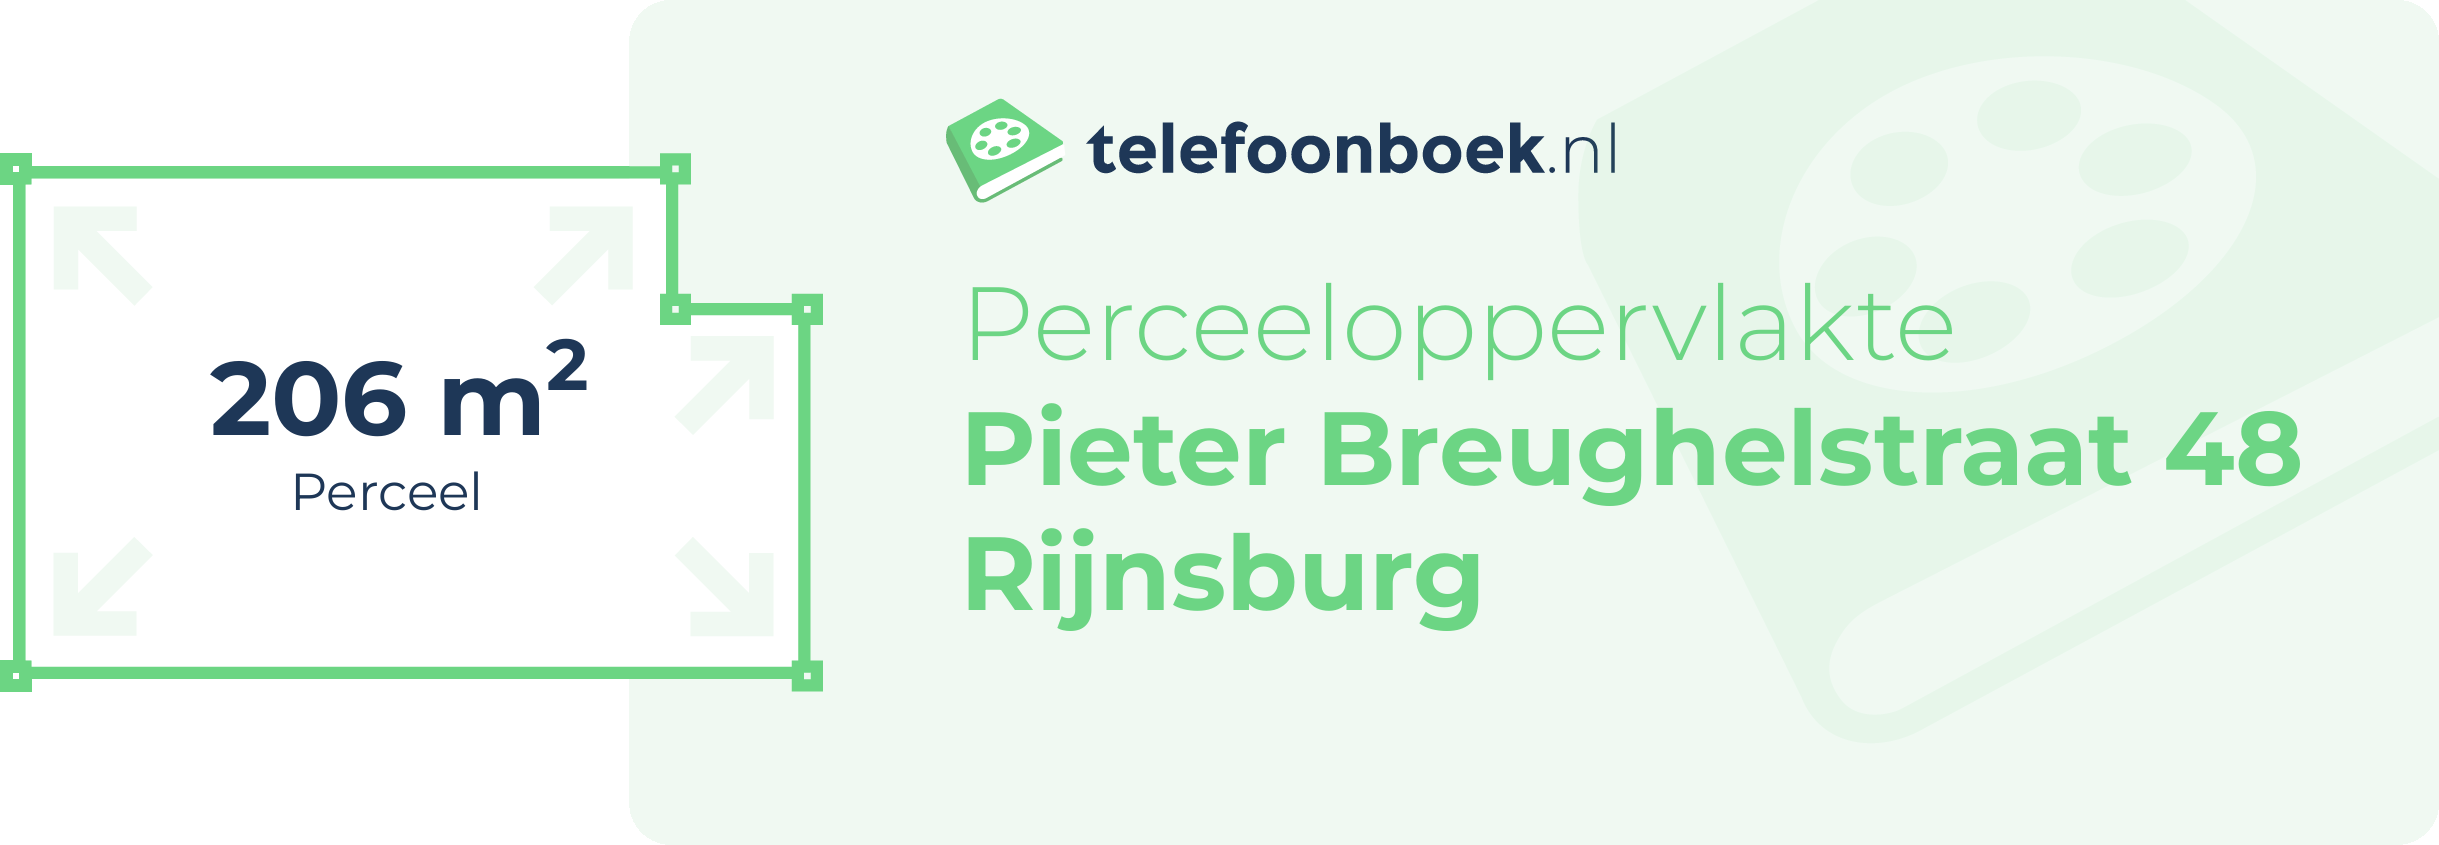 Perceeloppervlakte Pieter Breughelstraat 48 Rijnsburg